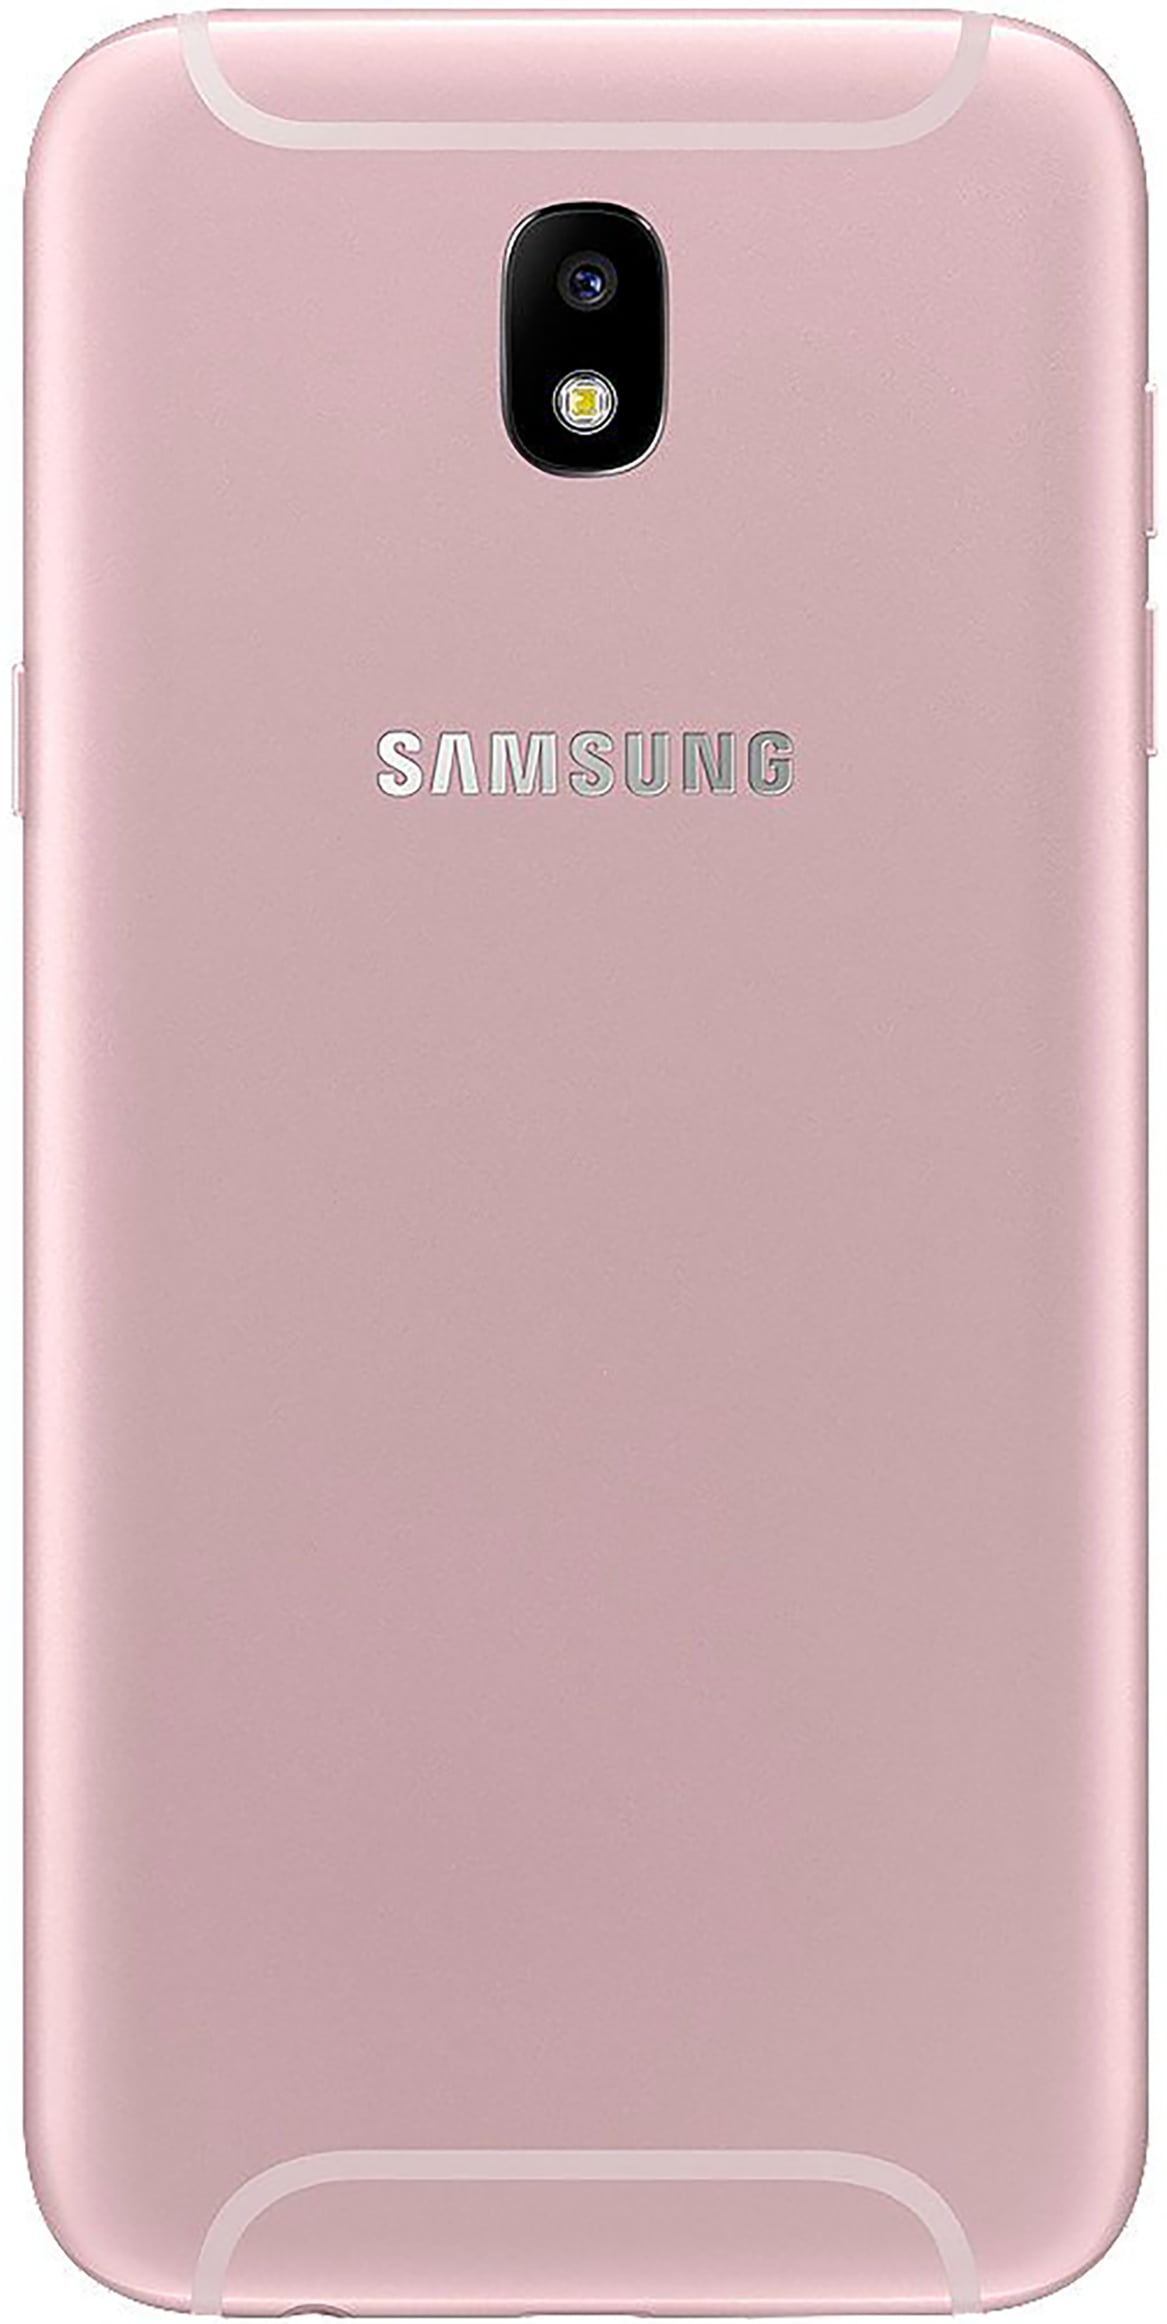 arrepentirse Amabilidad recurso renovable Restored Samsung Galaxy J7 Pro J730G 16GB Unlocked GSM Octa-Core Phone w/  13MP Camera - Pink (Refurbished) - Walmart.com